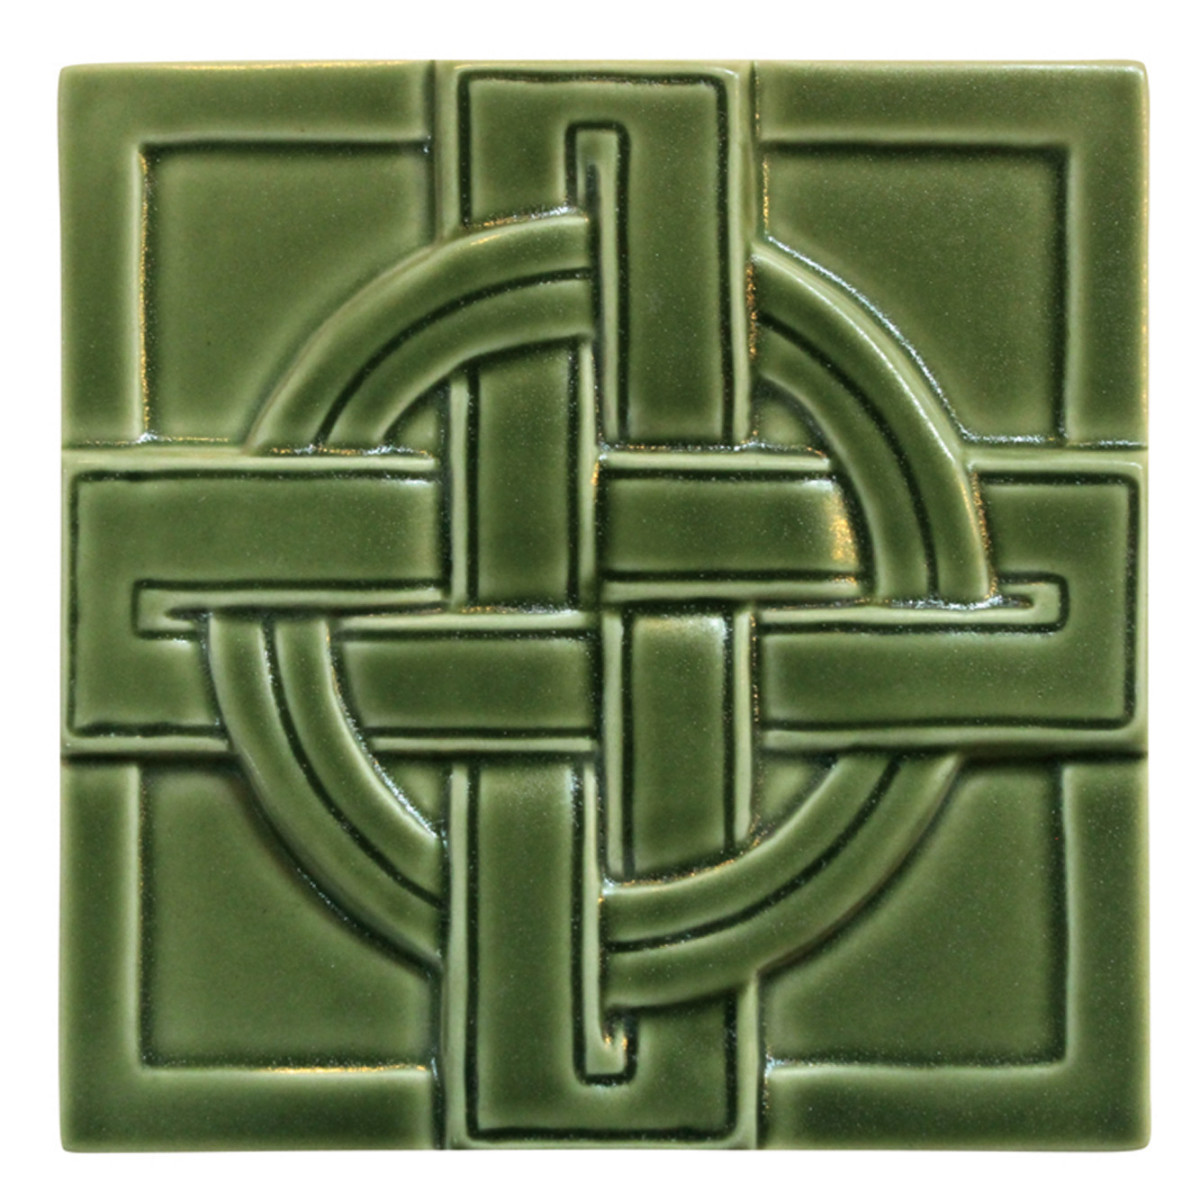 The "Castleknock" tile design.